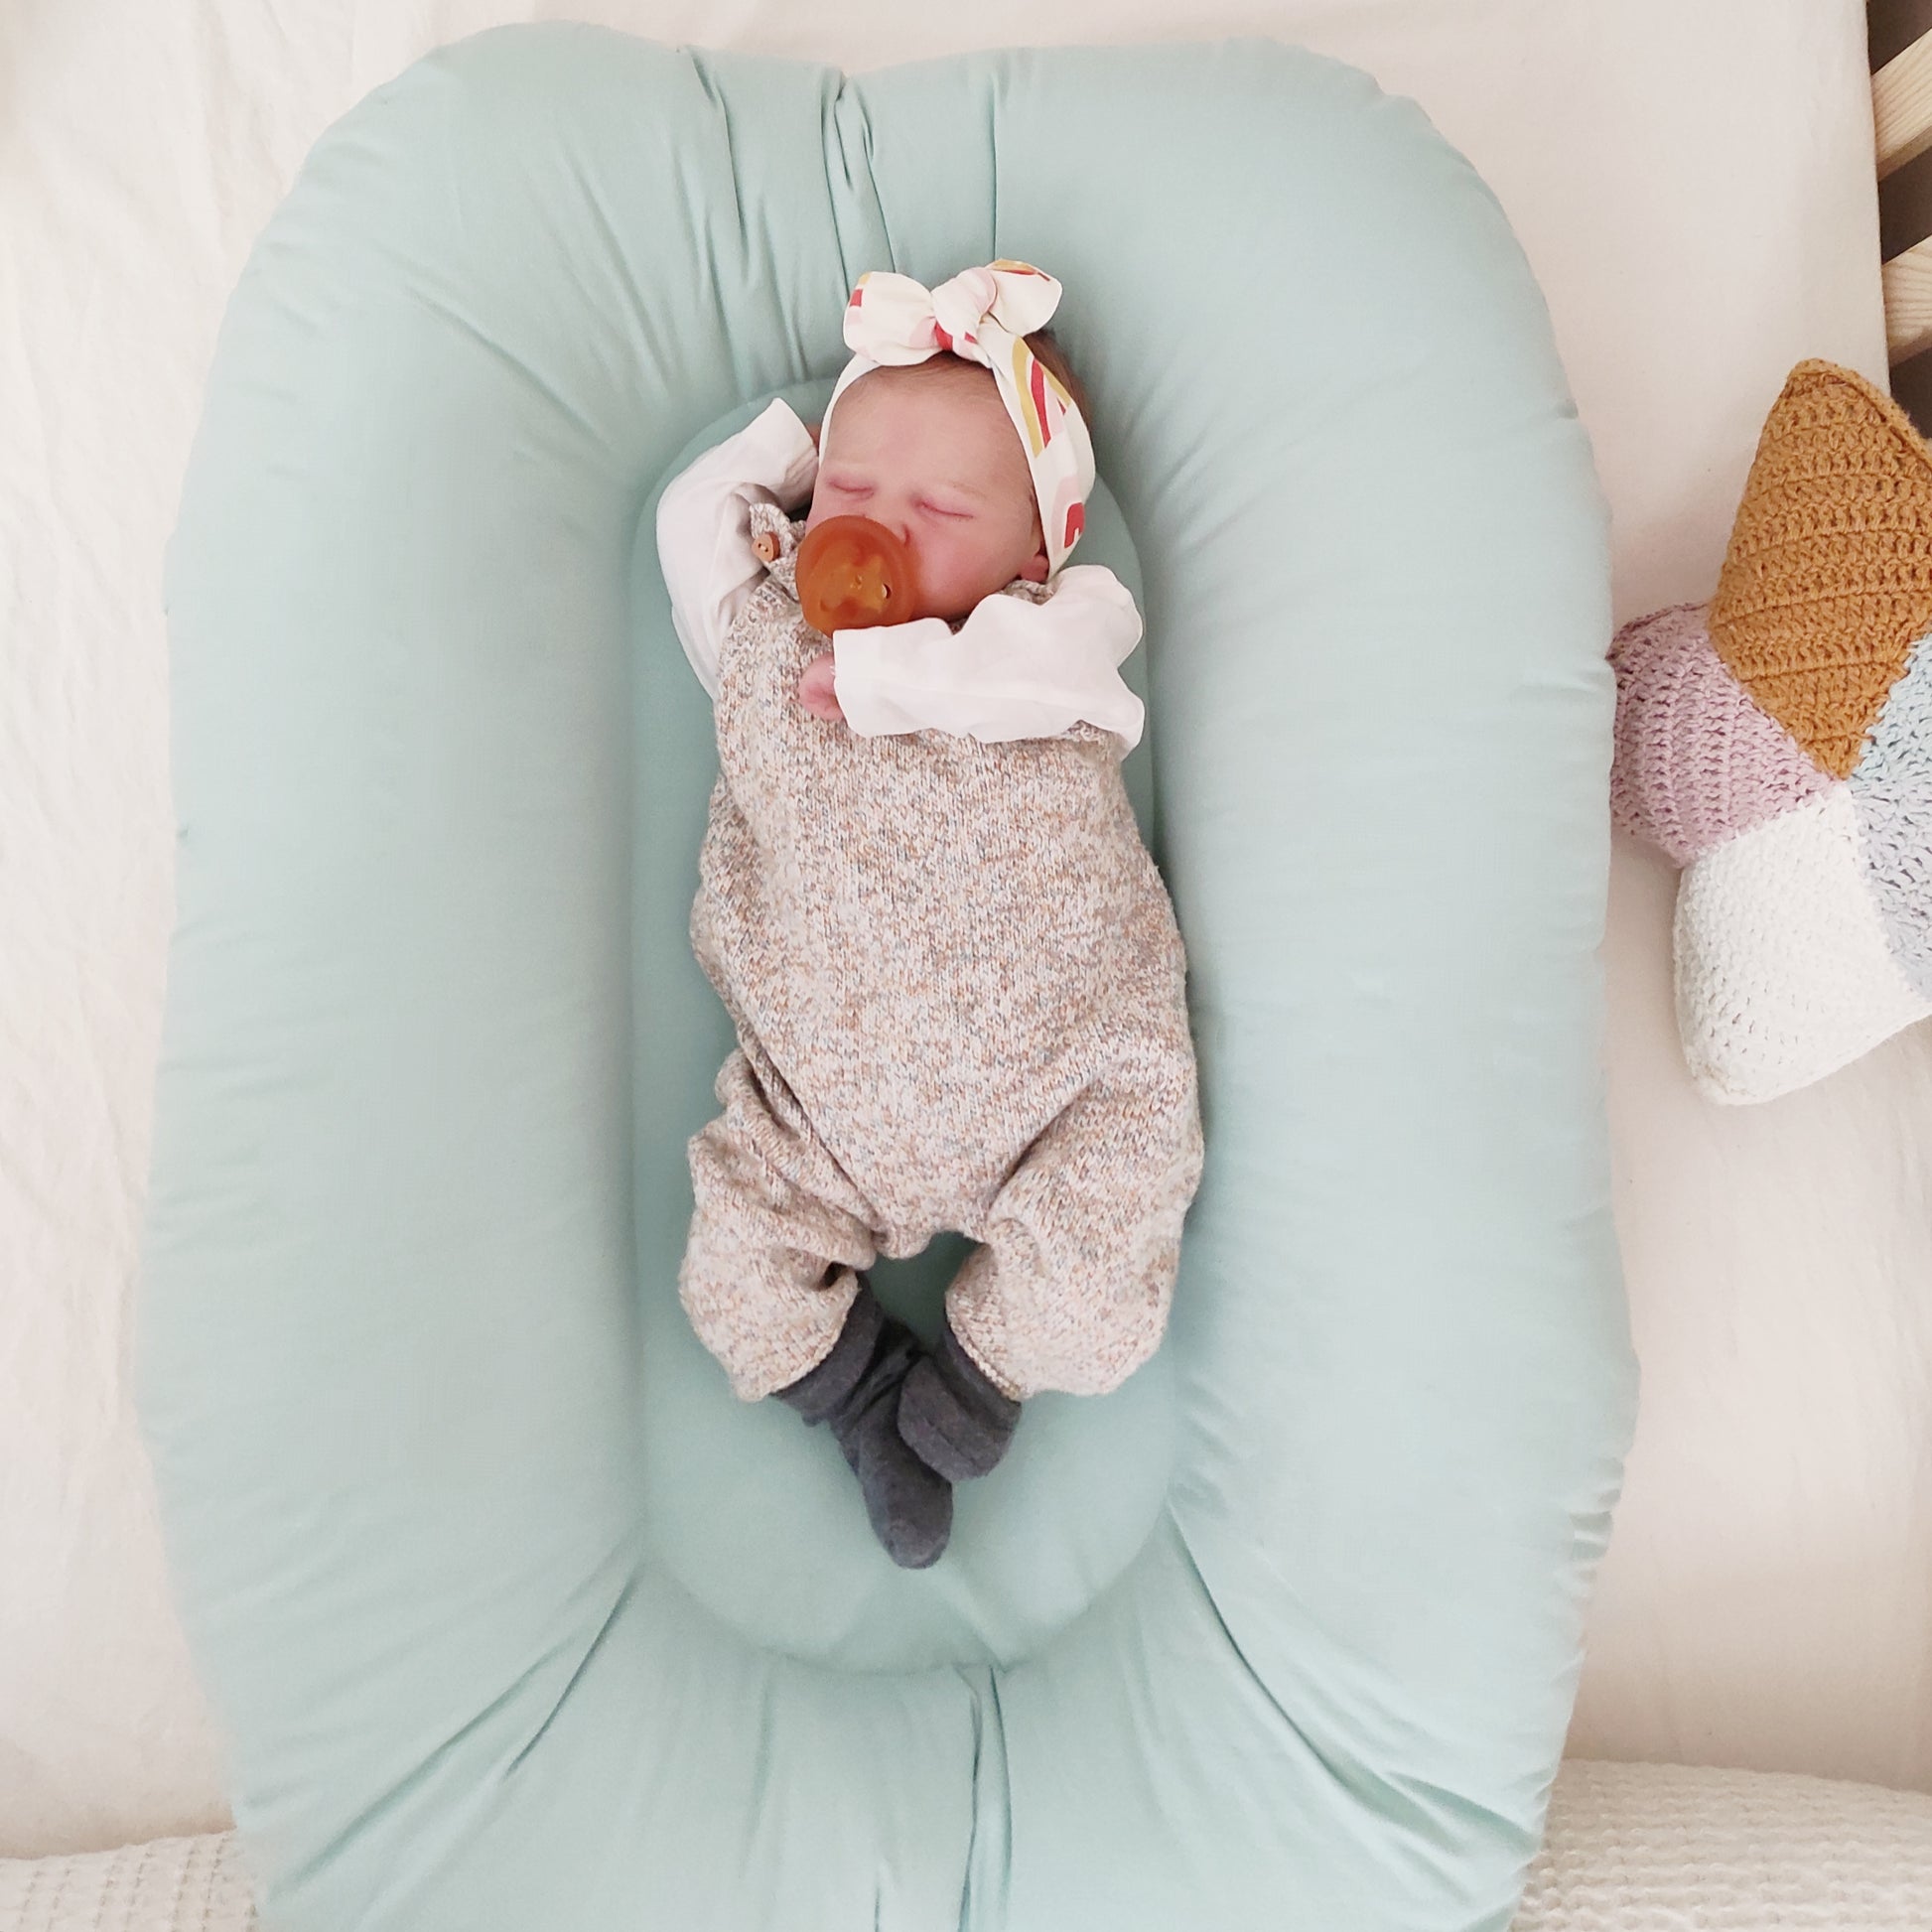 Mejores nidos para que tu bebé descanse